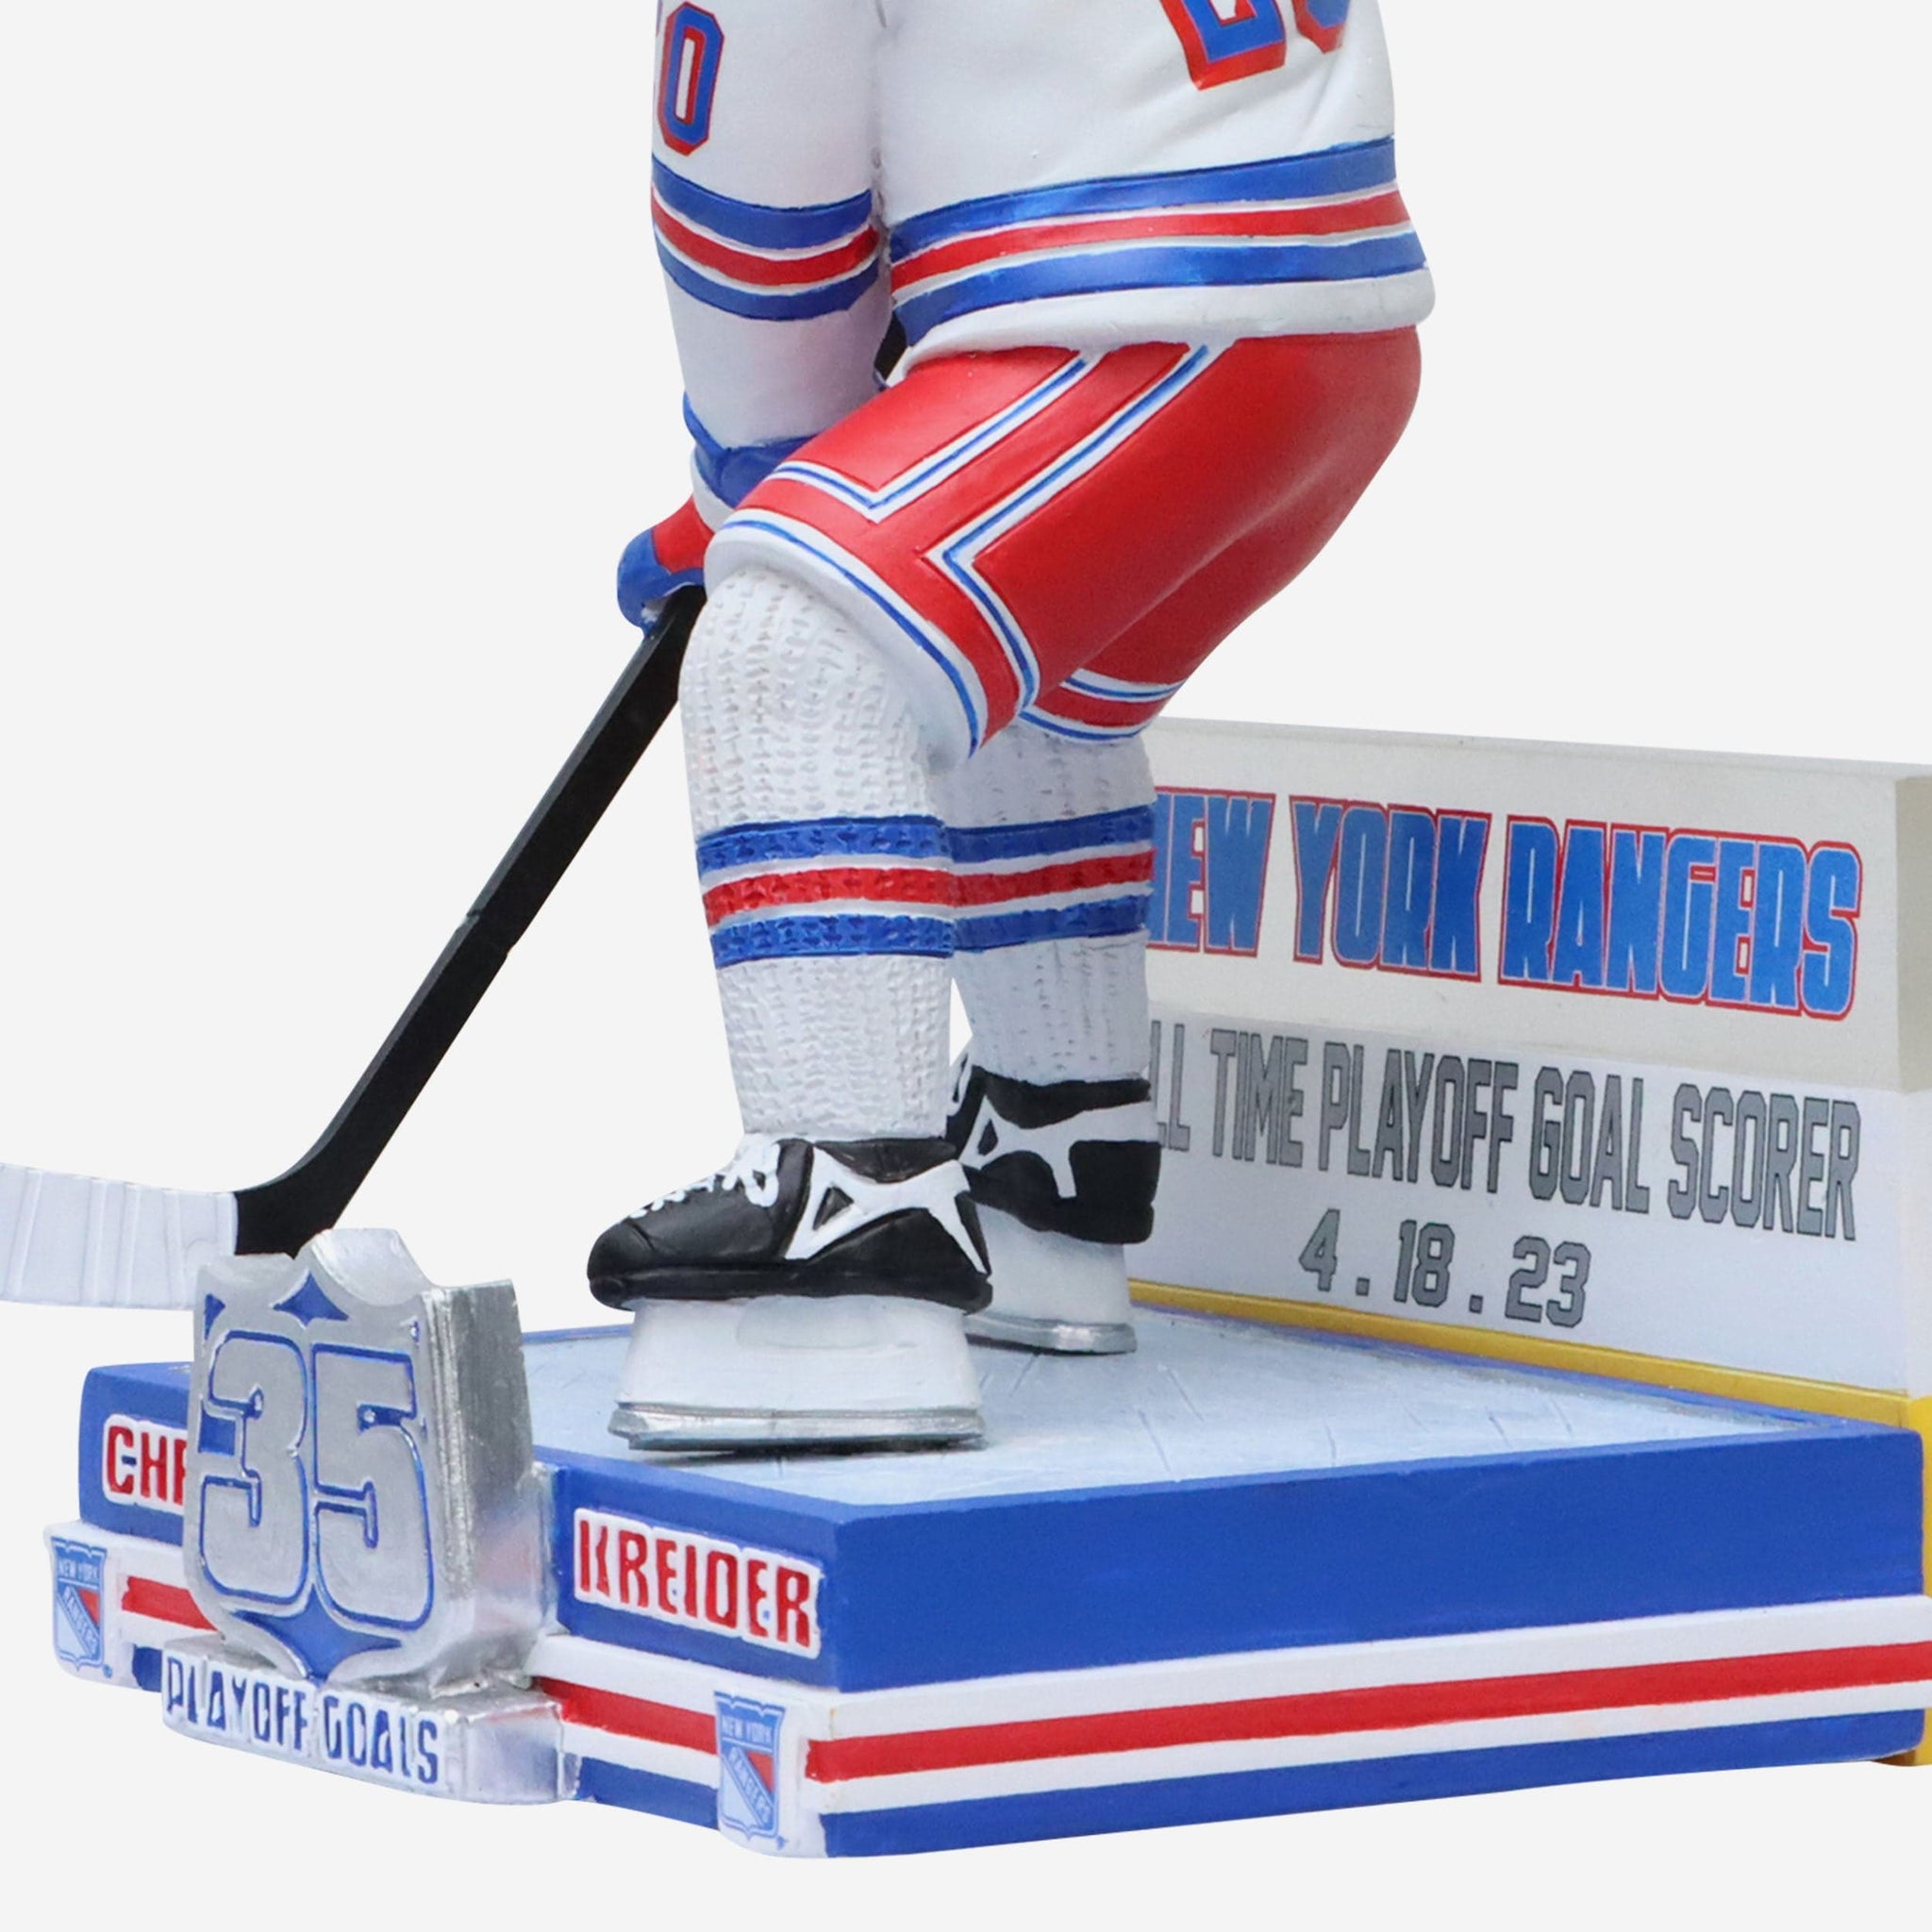 NHL Team Hockey Socks - New York Rangers - Intermediate